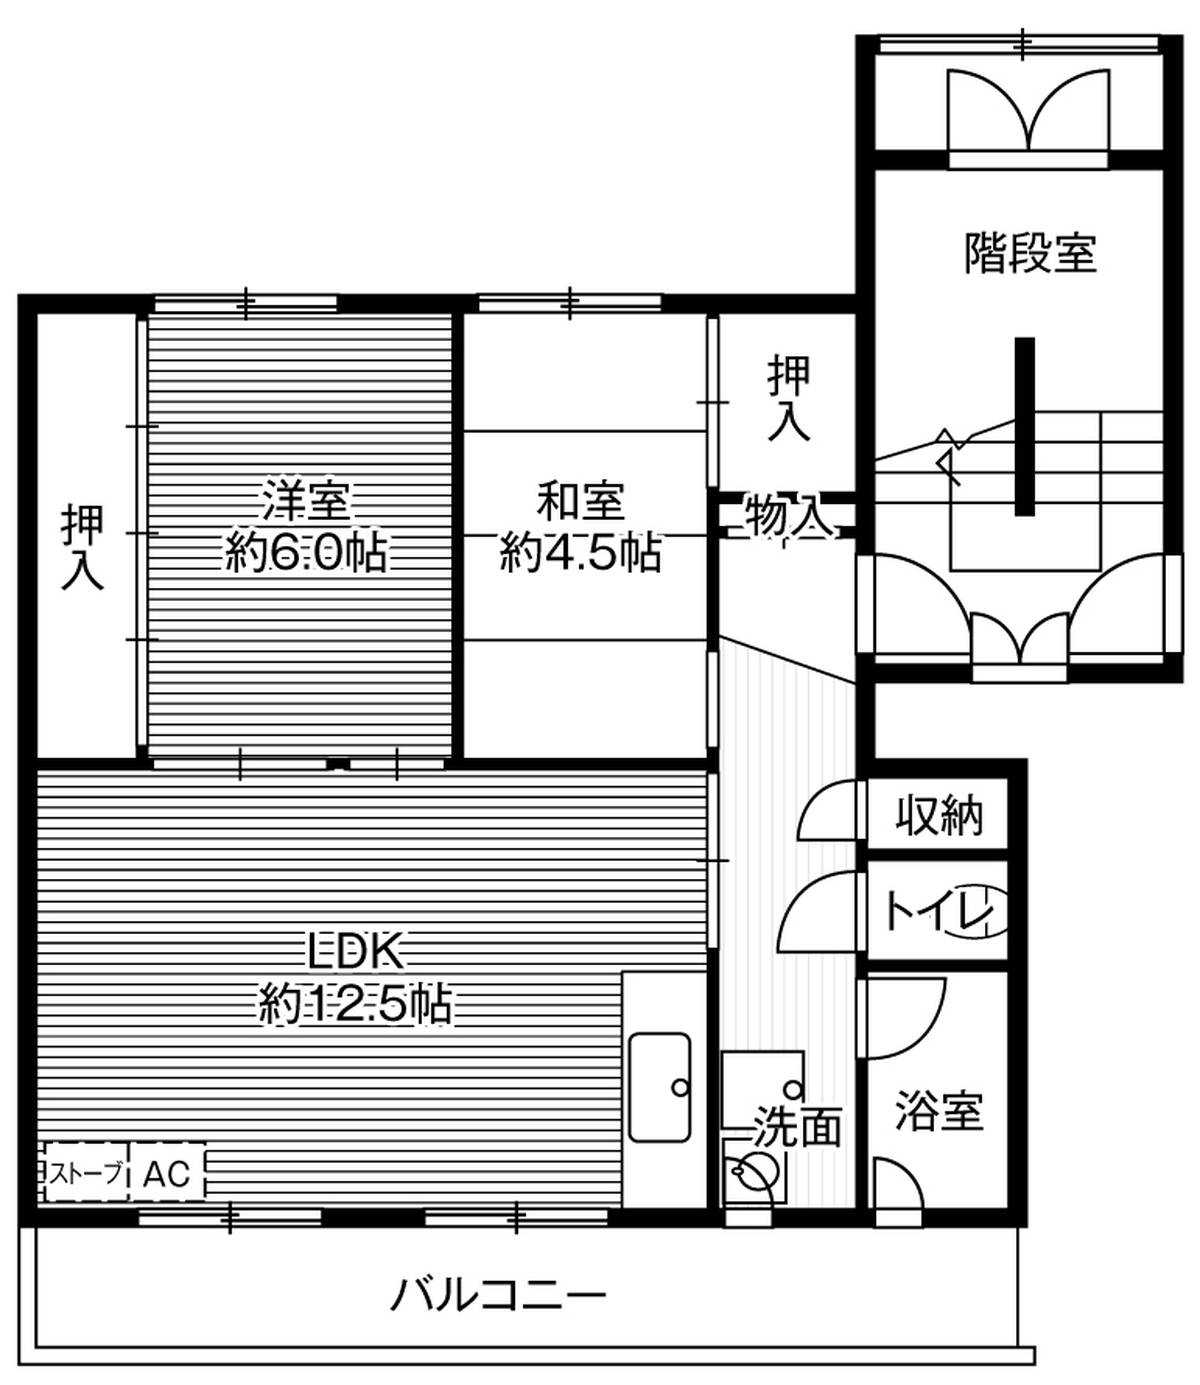 2LDK floorplan of Village House Shin Higashimachi in Iwamizawa-shi